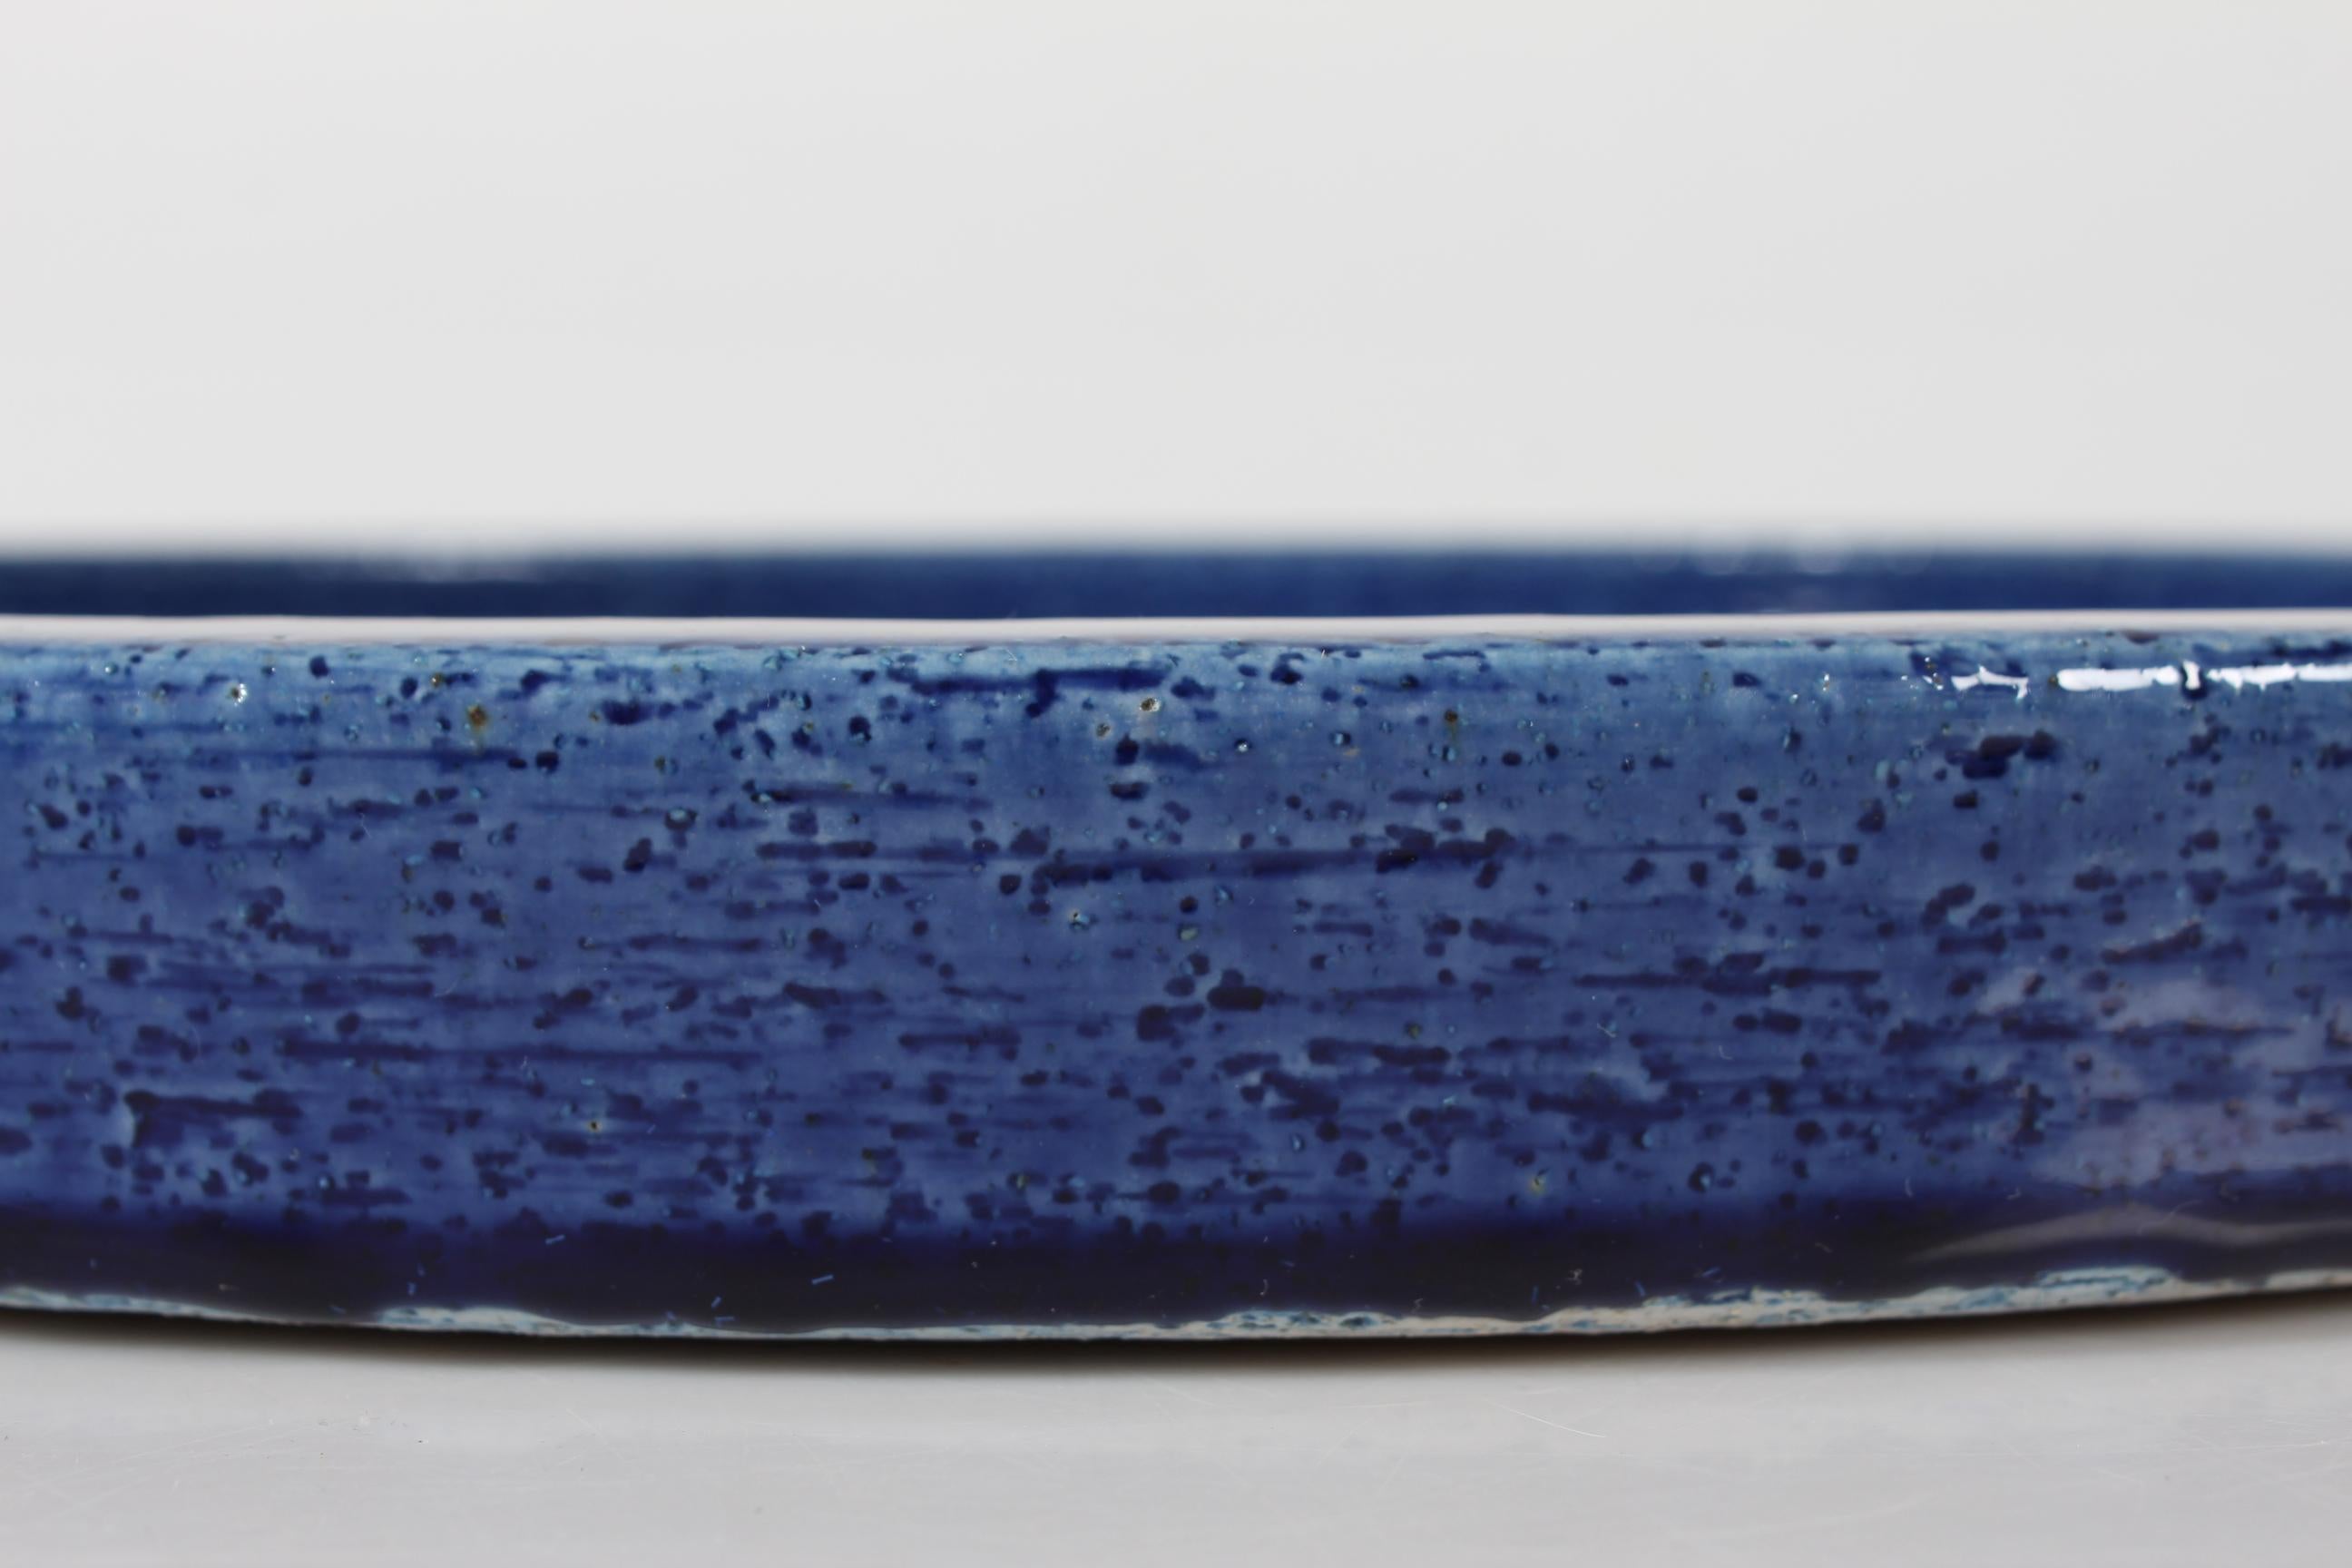 XXL Palshus Large Low Dish with Deep Blue Glaze by Per Linnemann-Schmidt 1963 In Good Condition For Sale In Aarhus C, DK